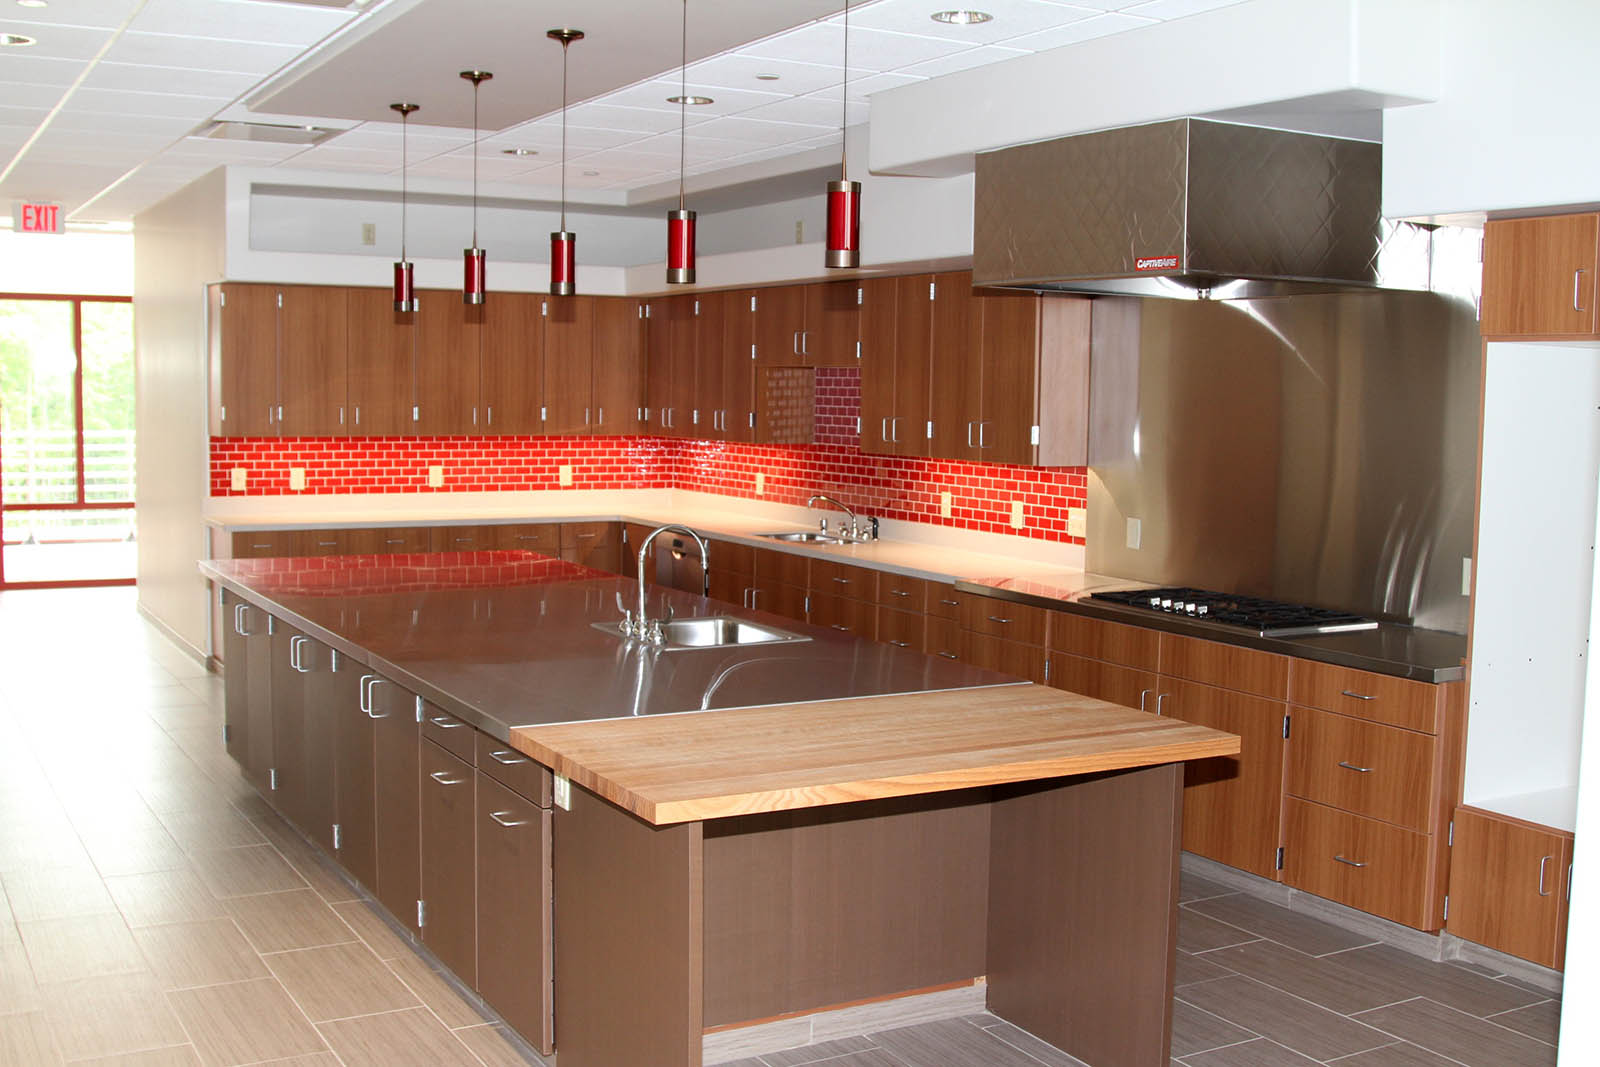 Kitchen area with overhead hanging light fixtures, backsplash lighting and large range hood